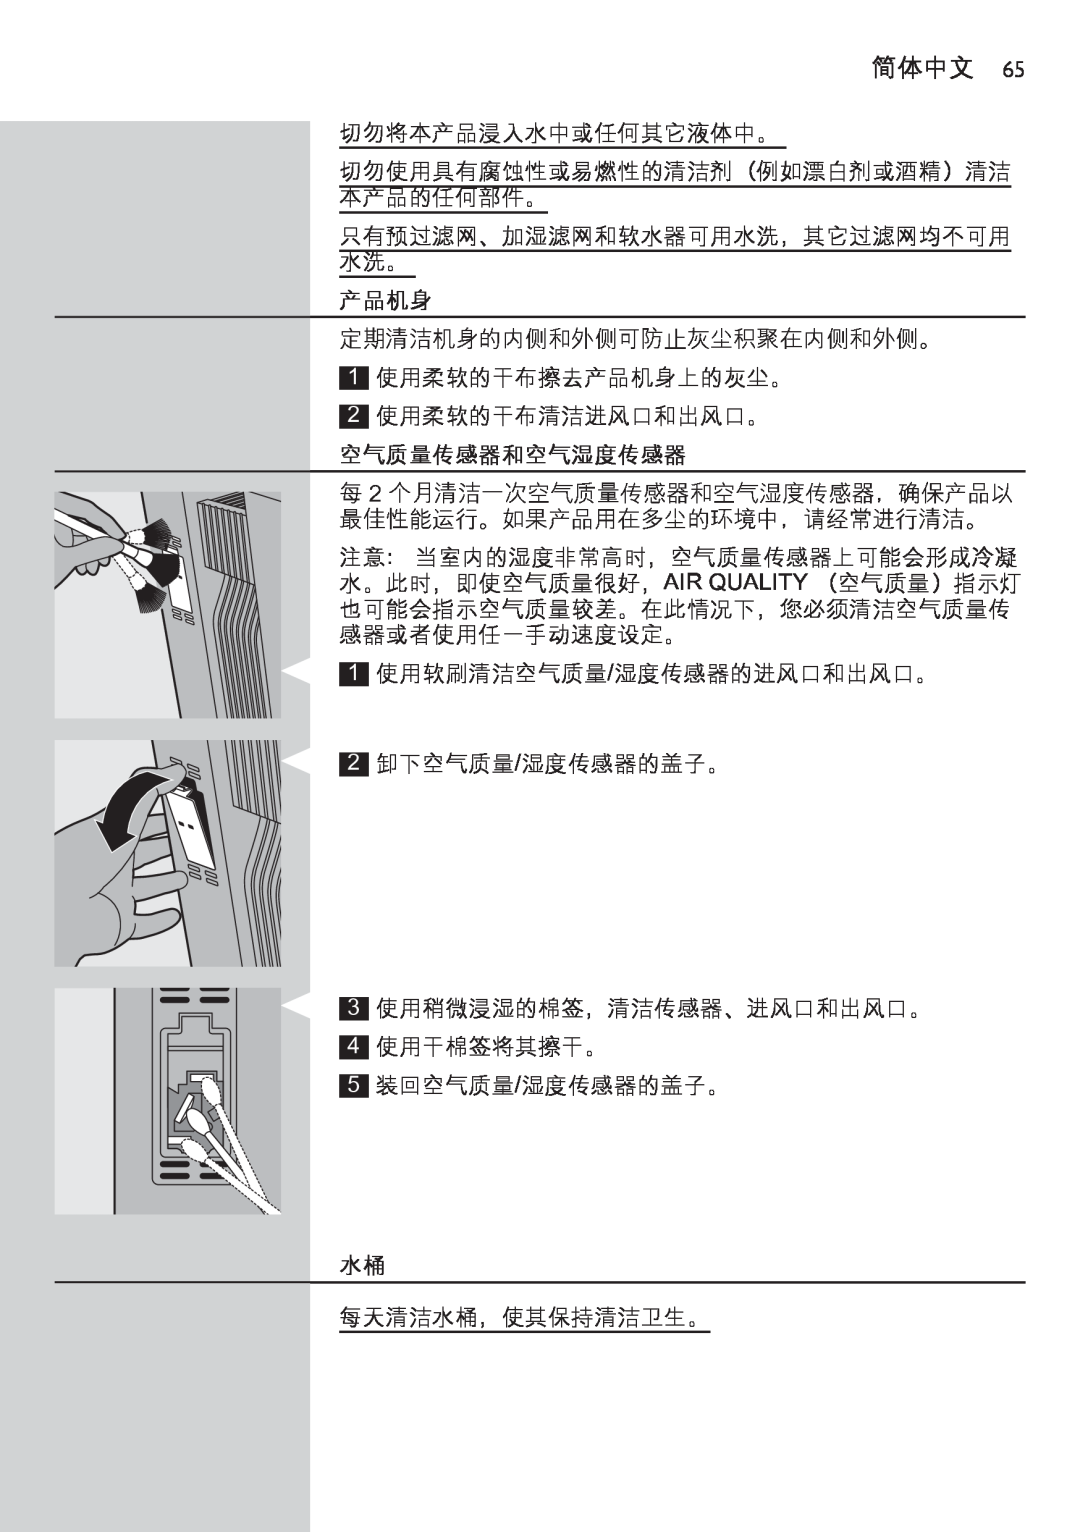 Philips AC4083 manual 产品机身, 空气质量传感器和空气湿度传感器, 简体中文 